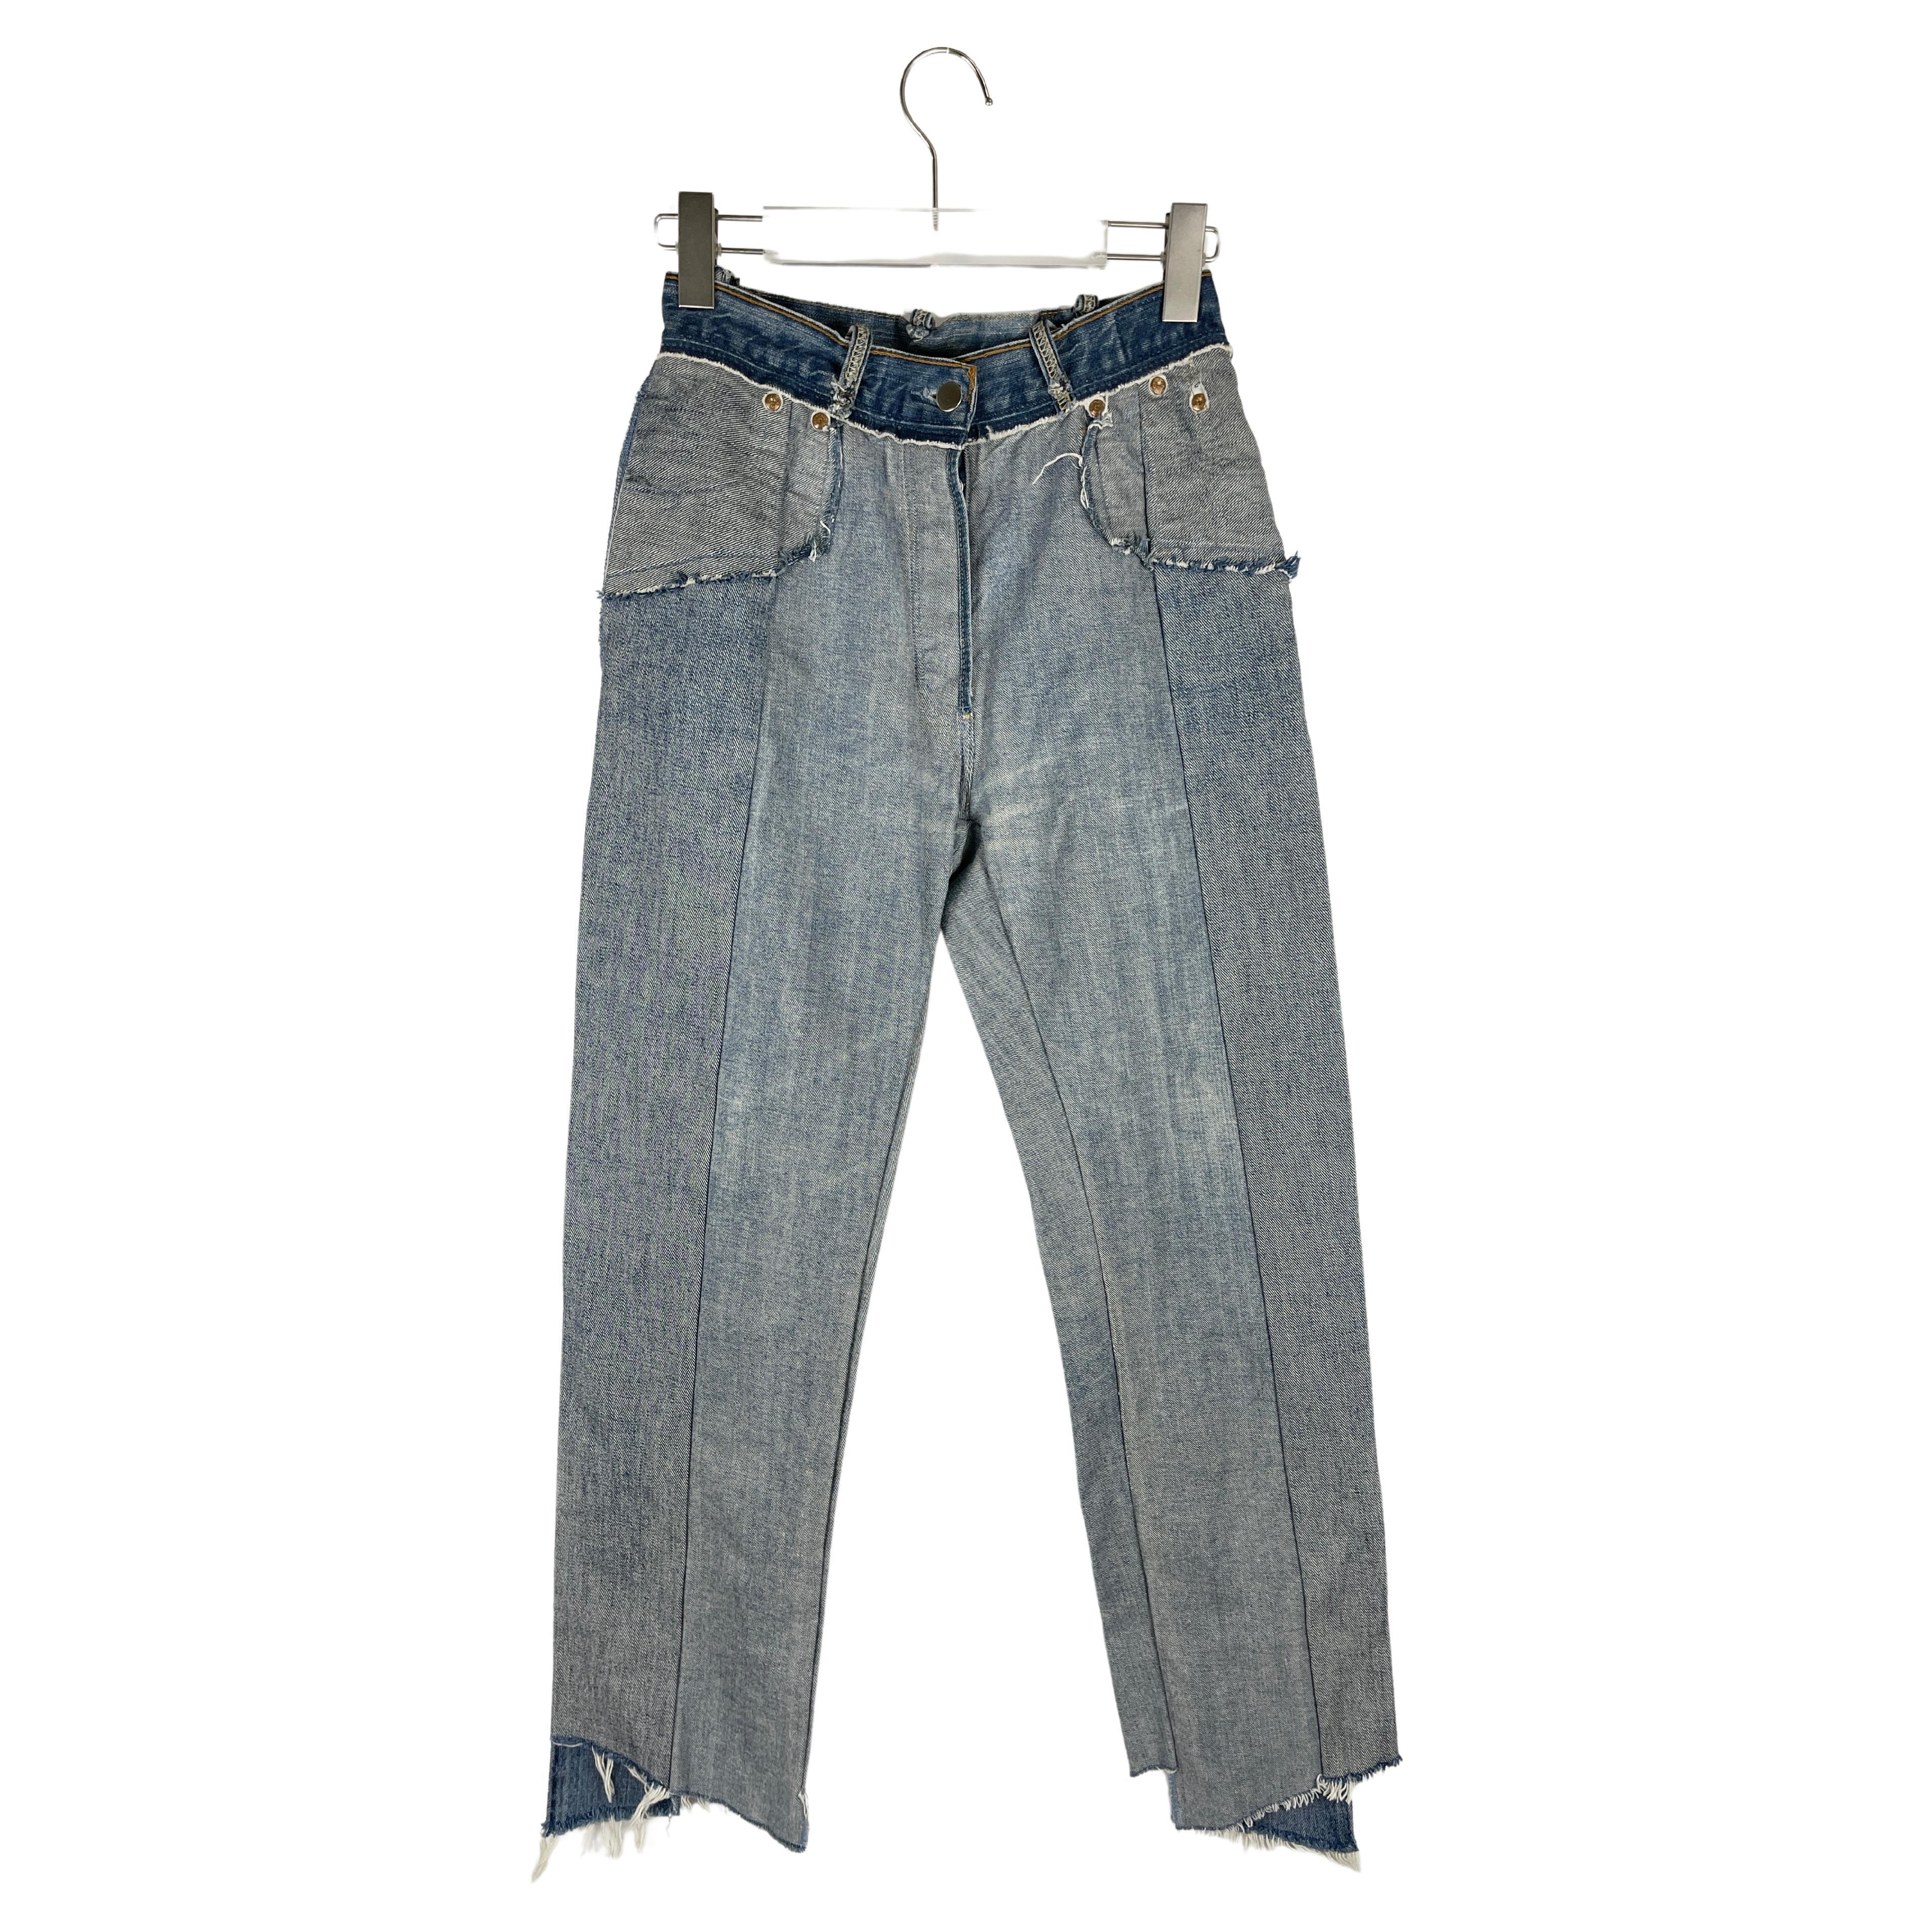 Vetements x Levi's 2017 Bearbeitete Jeans im Angebot